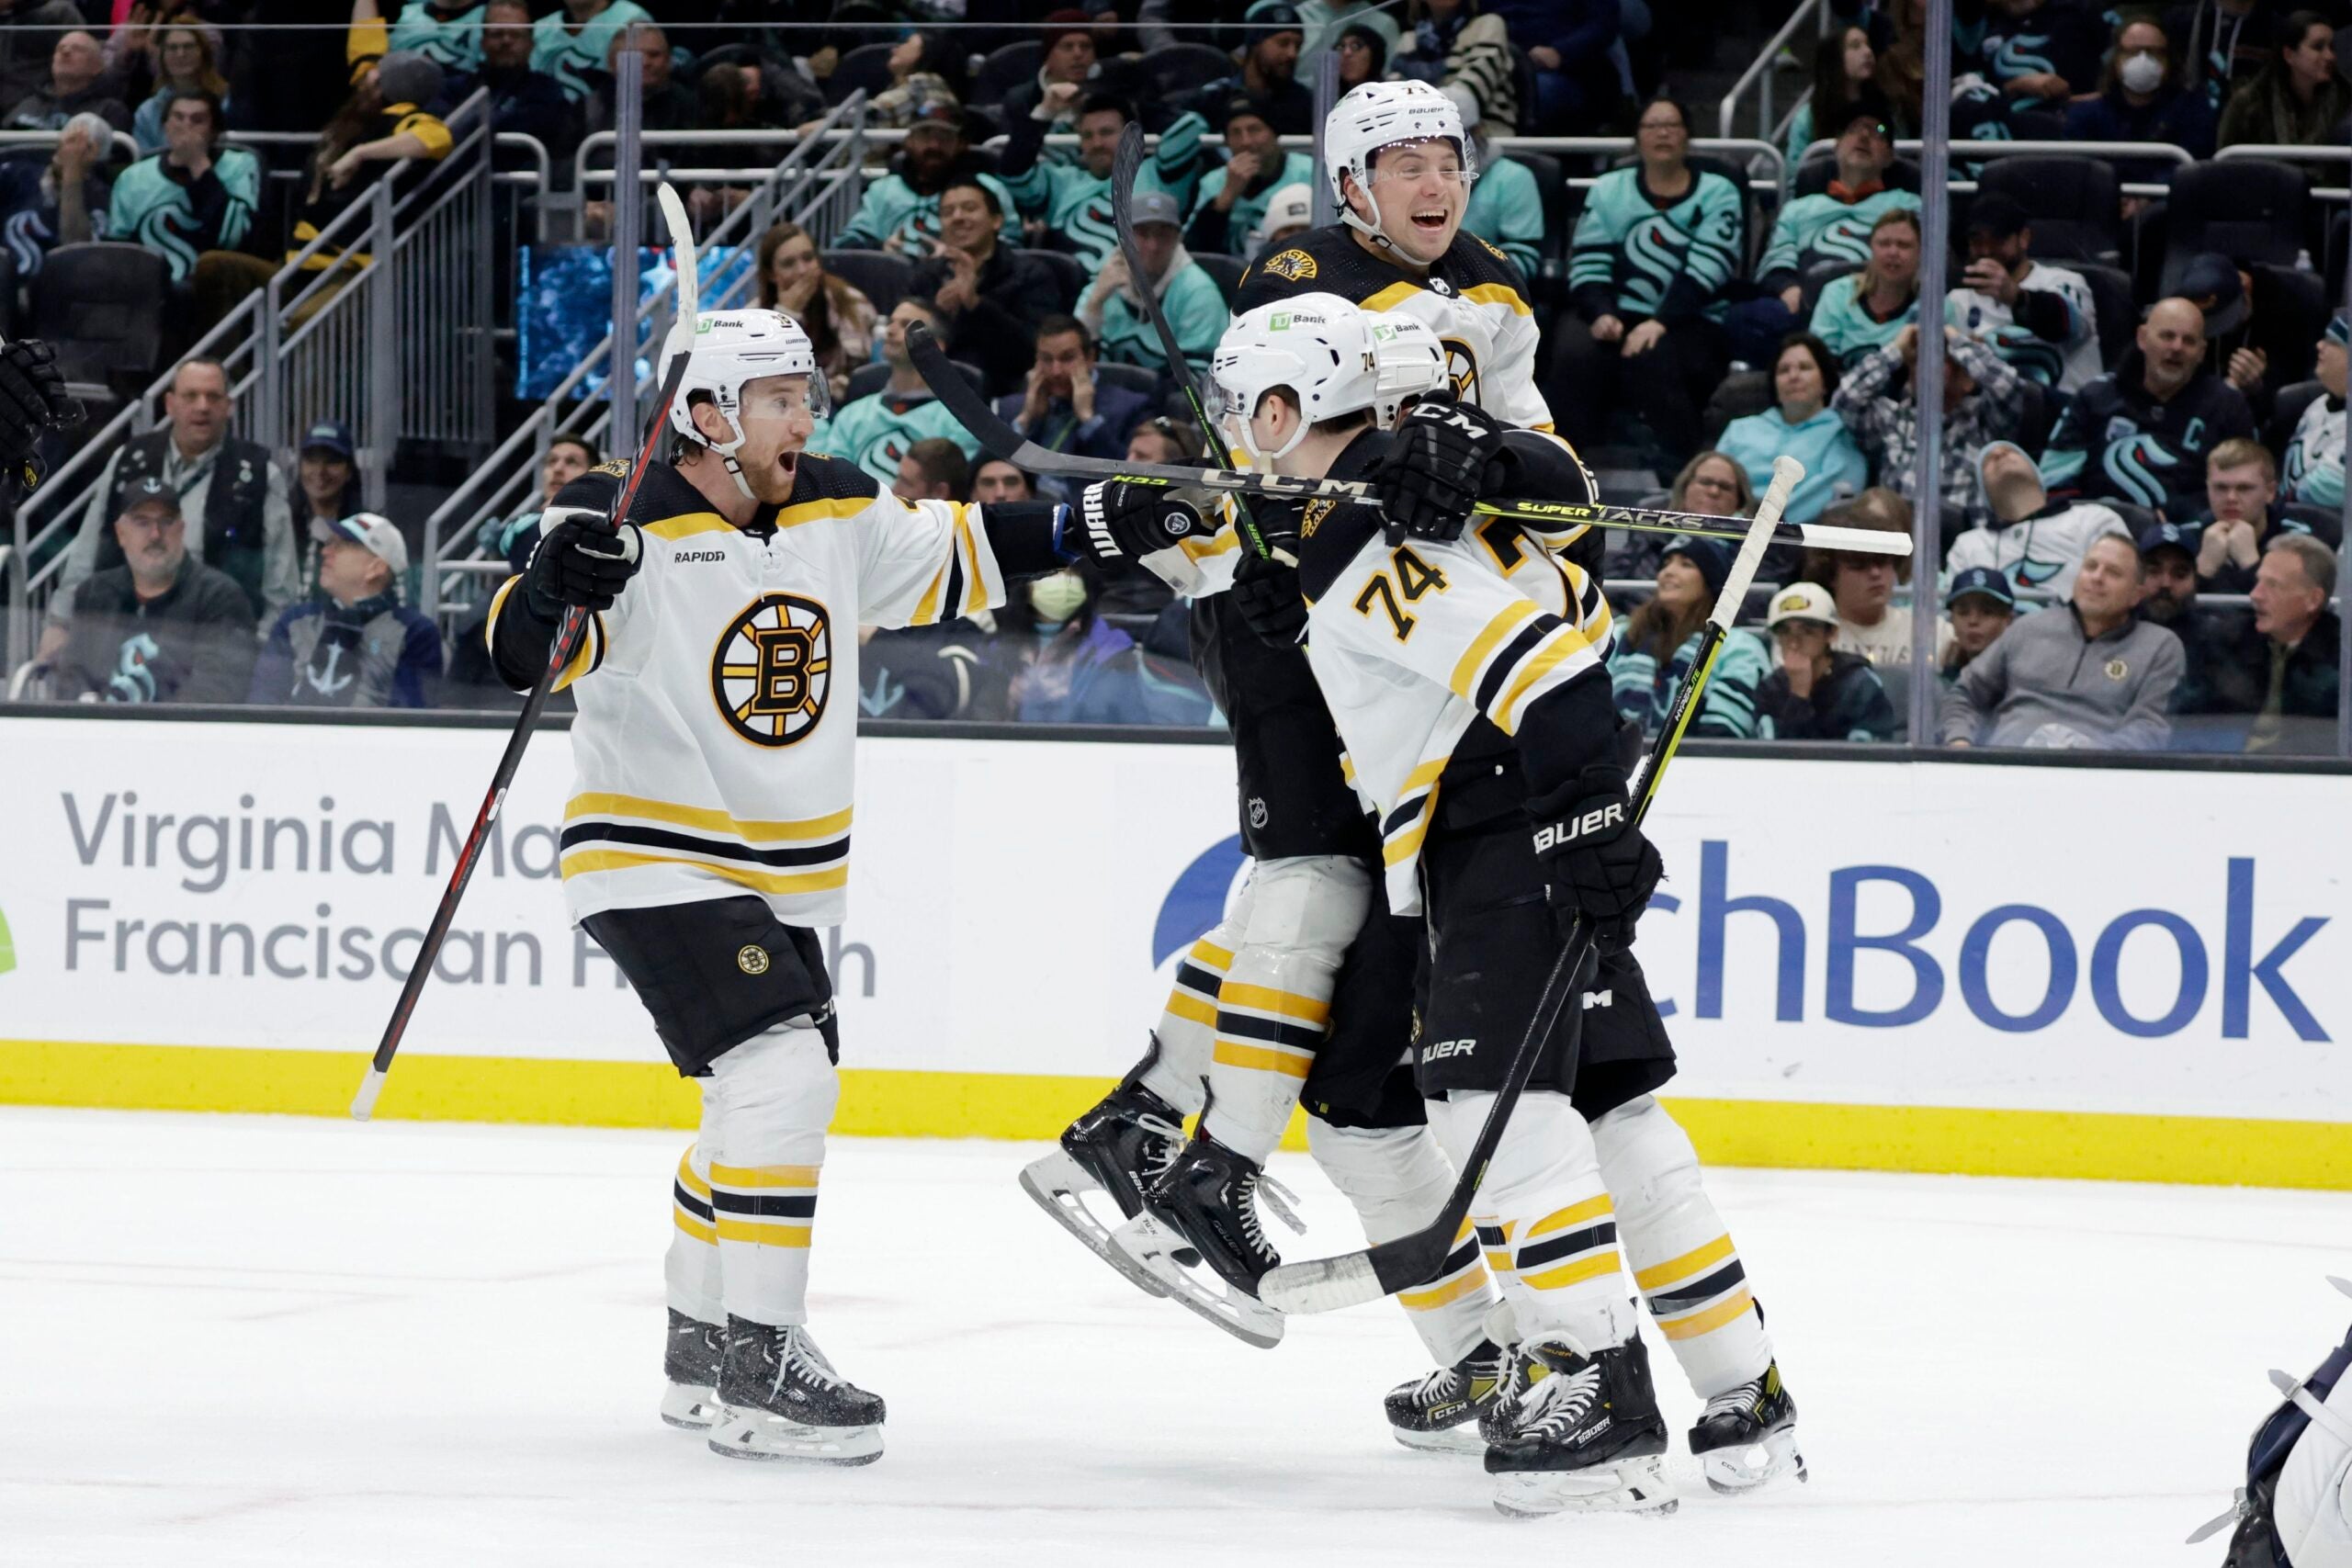 The Bruins celebrate Jake DeBrusk's third period goal.